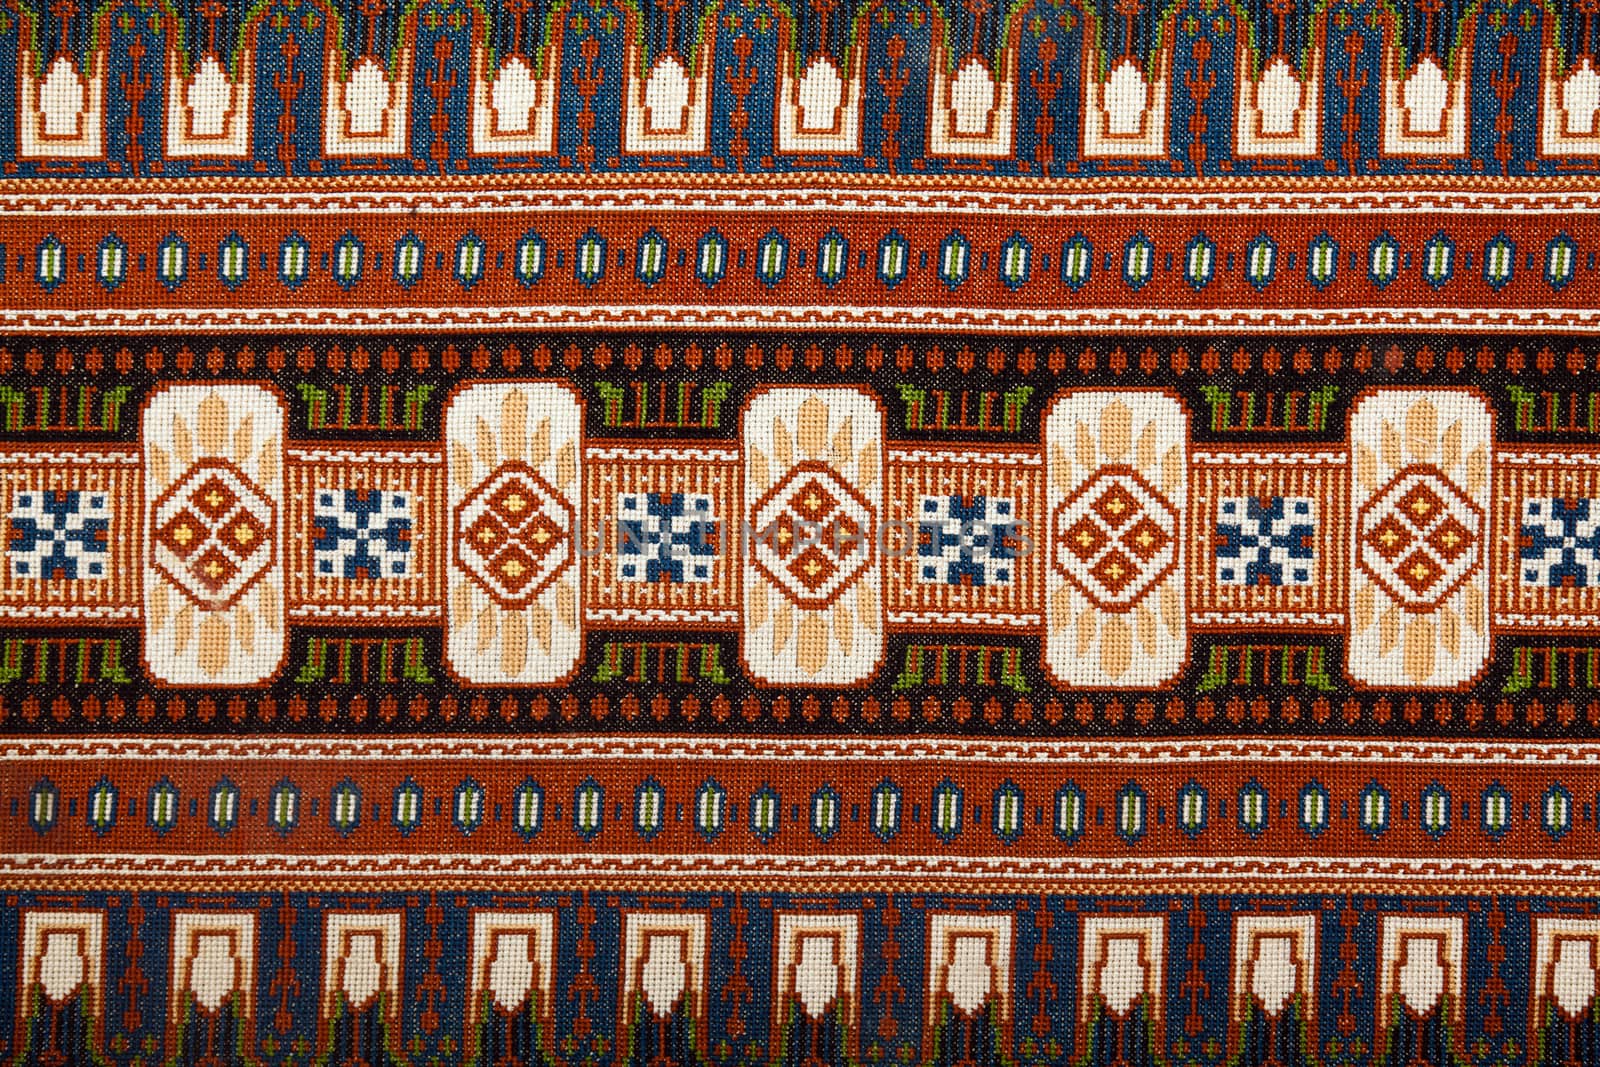 Handmade embroidery by Portokalis